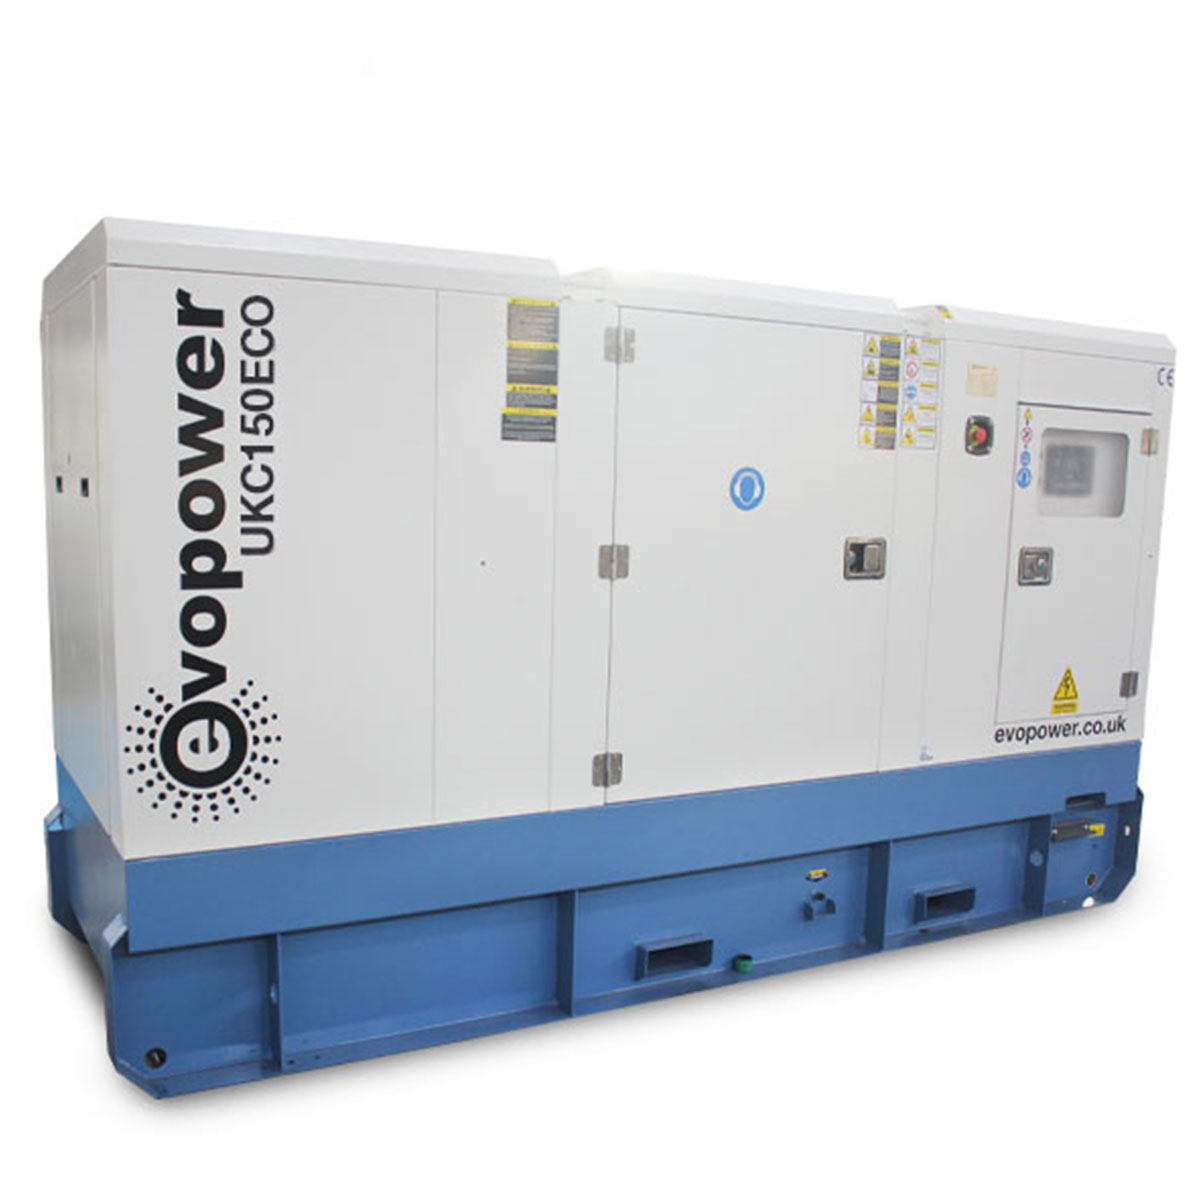 Evopower UKC150ECO 3-phase Diesel Generator